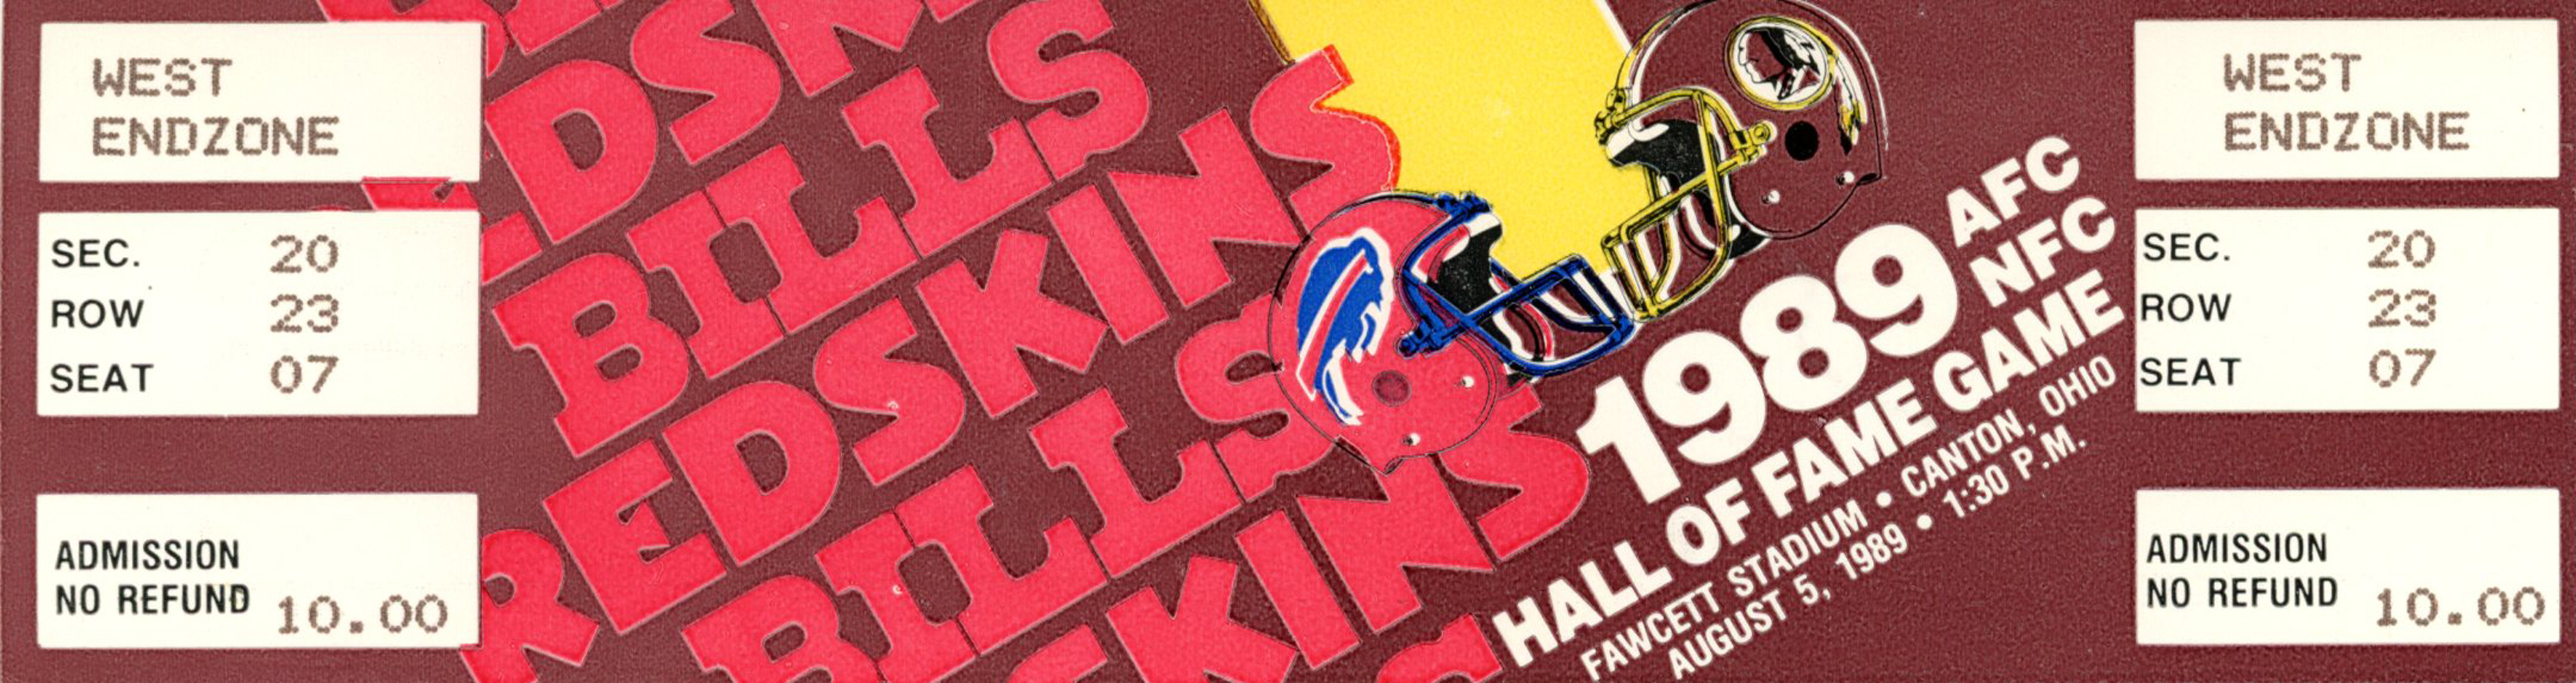 1989 Hall Of Fame Game Ticket Buffalo Bills vs Washington Redskins